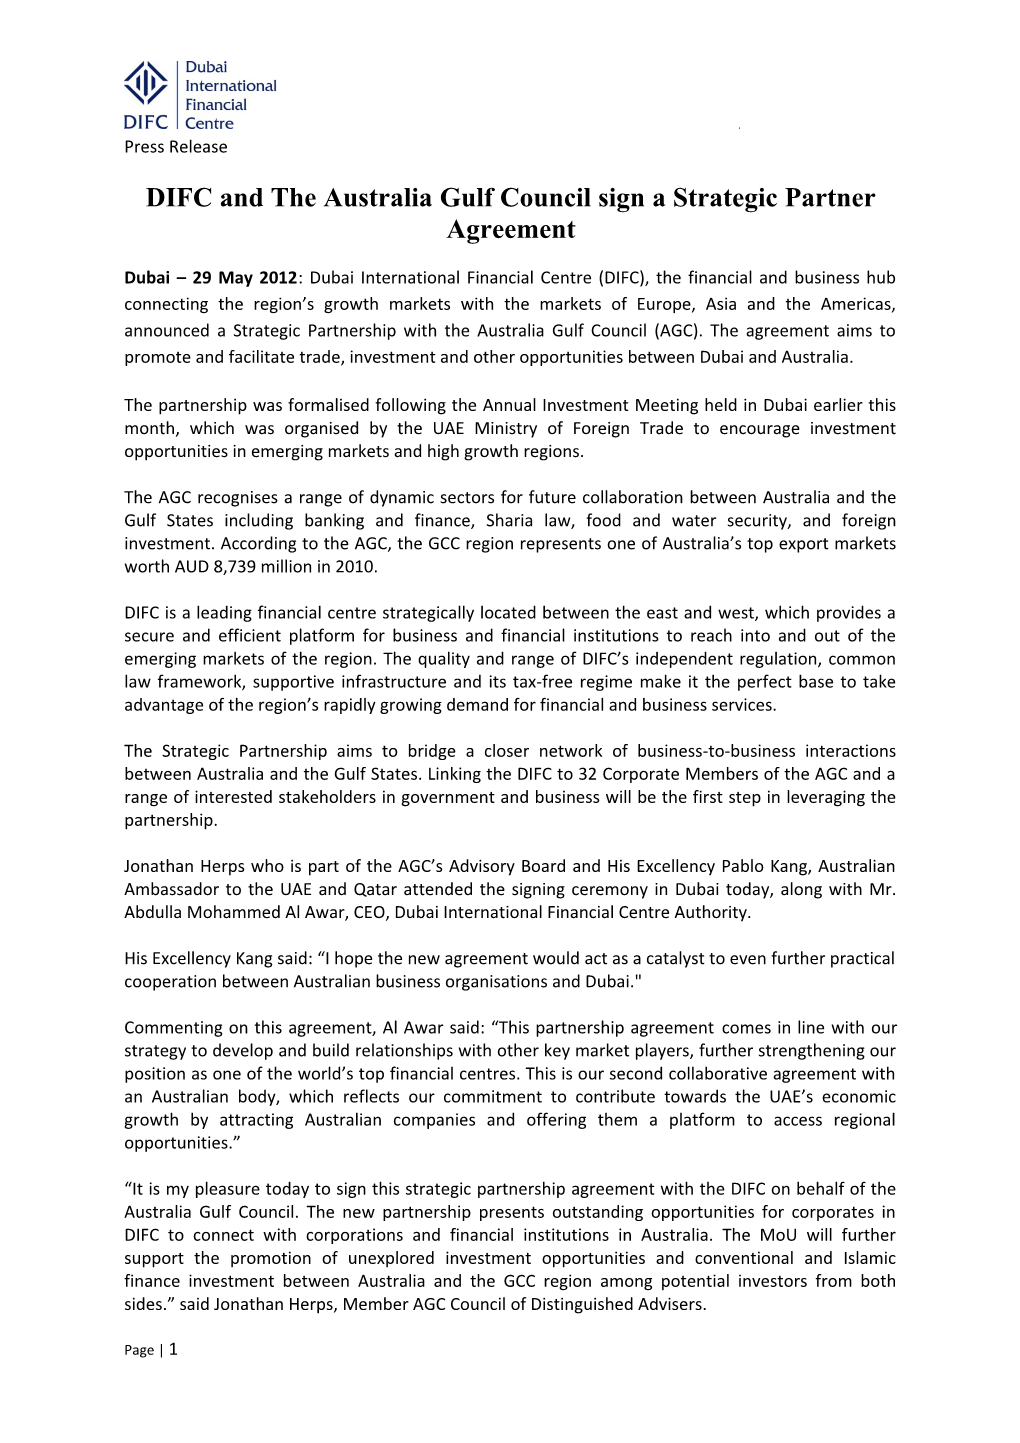 DIFC and the Australia Gulf Council Sign a Strategicpartneragreement